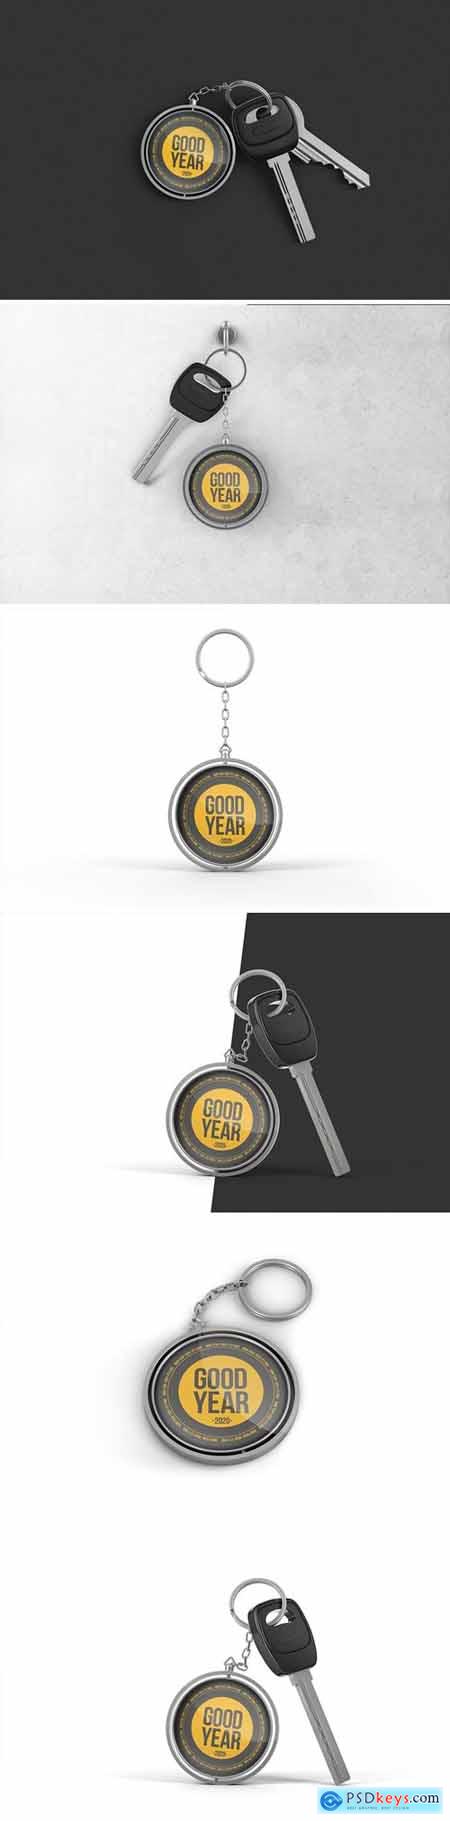 Branded Metal Keychain Mockup